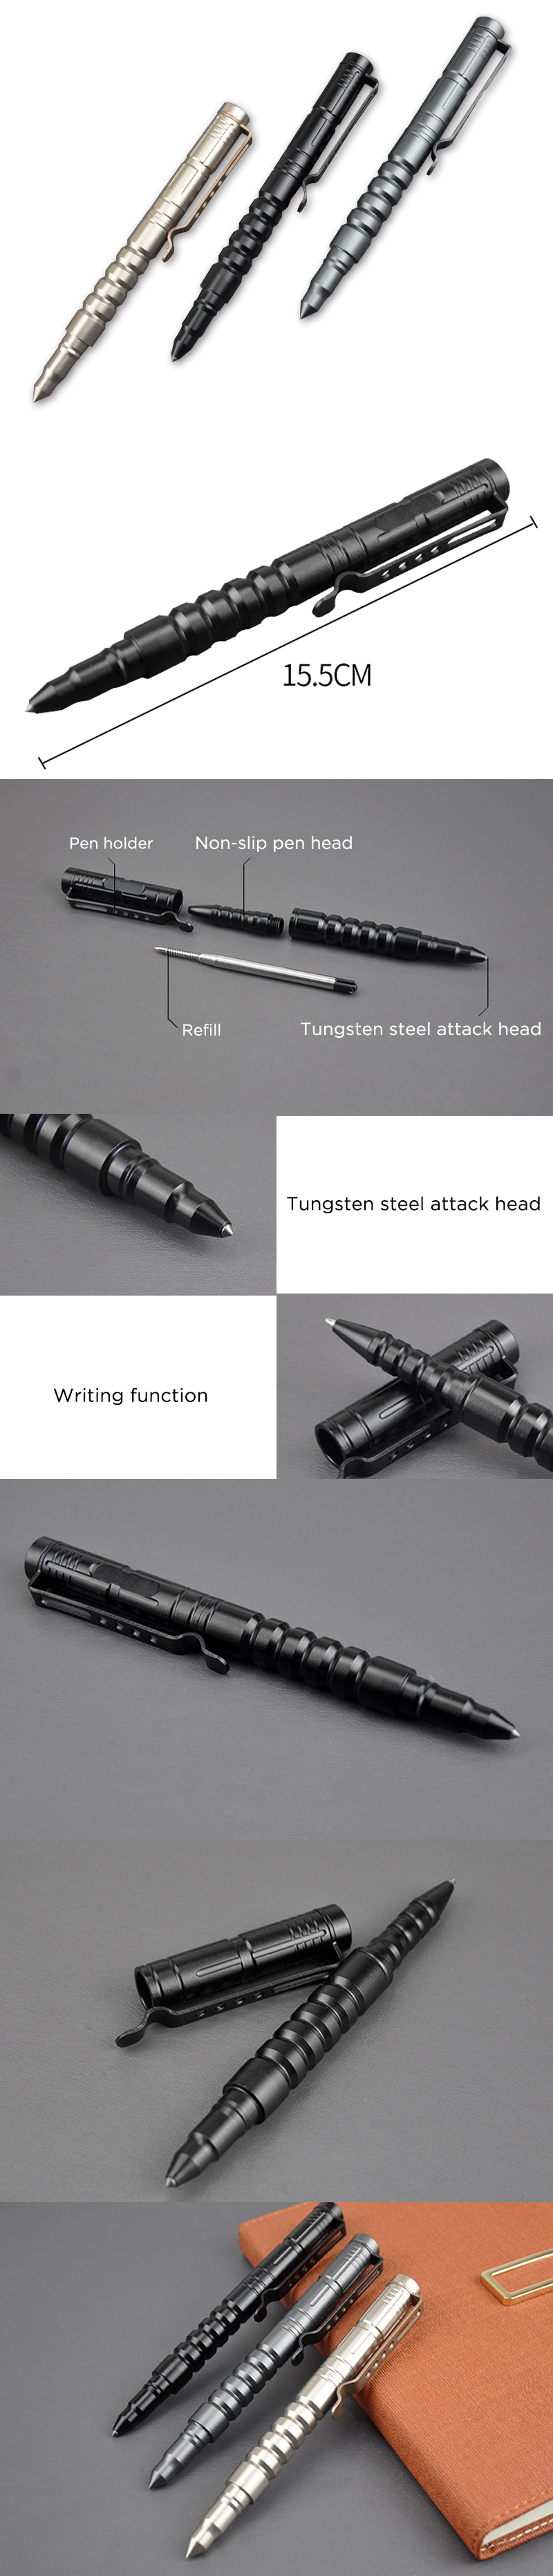 LeoHansen-B8S-Tactical-Pen-Survival-Pen-with-Tungsten-Steel-Attack-Head-Writing-Gel-Pen-1481672-1